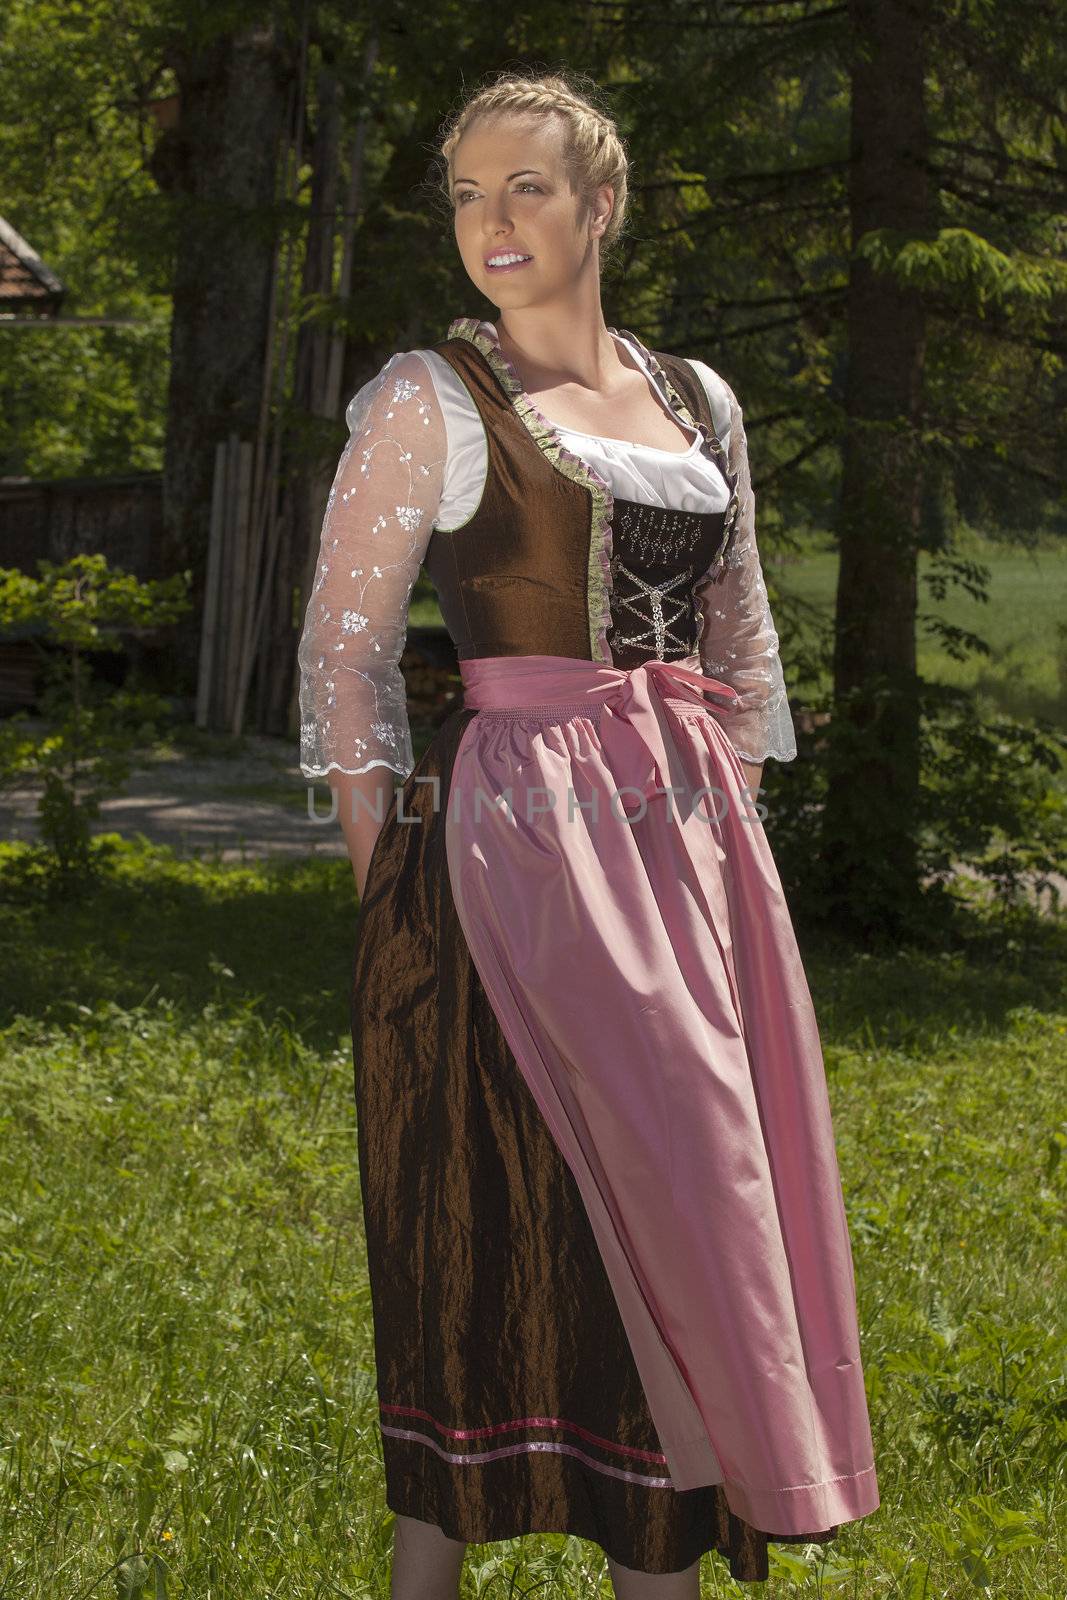 Young Bavarian woman in a fashionable dress silk dress